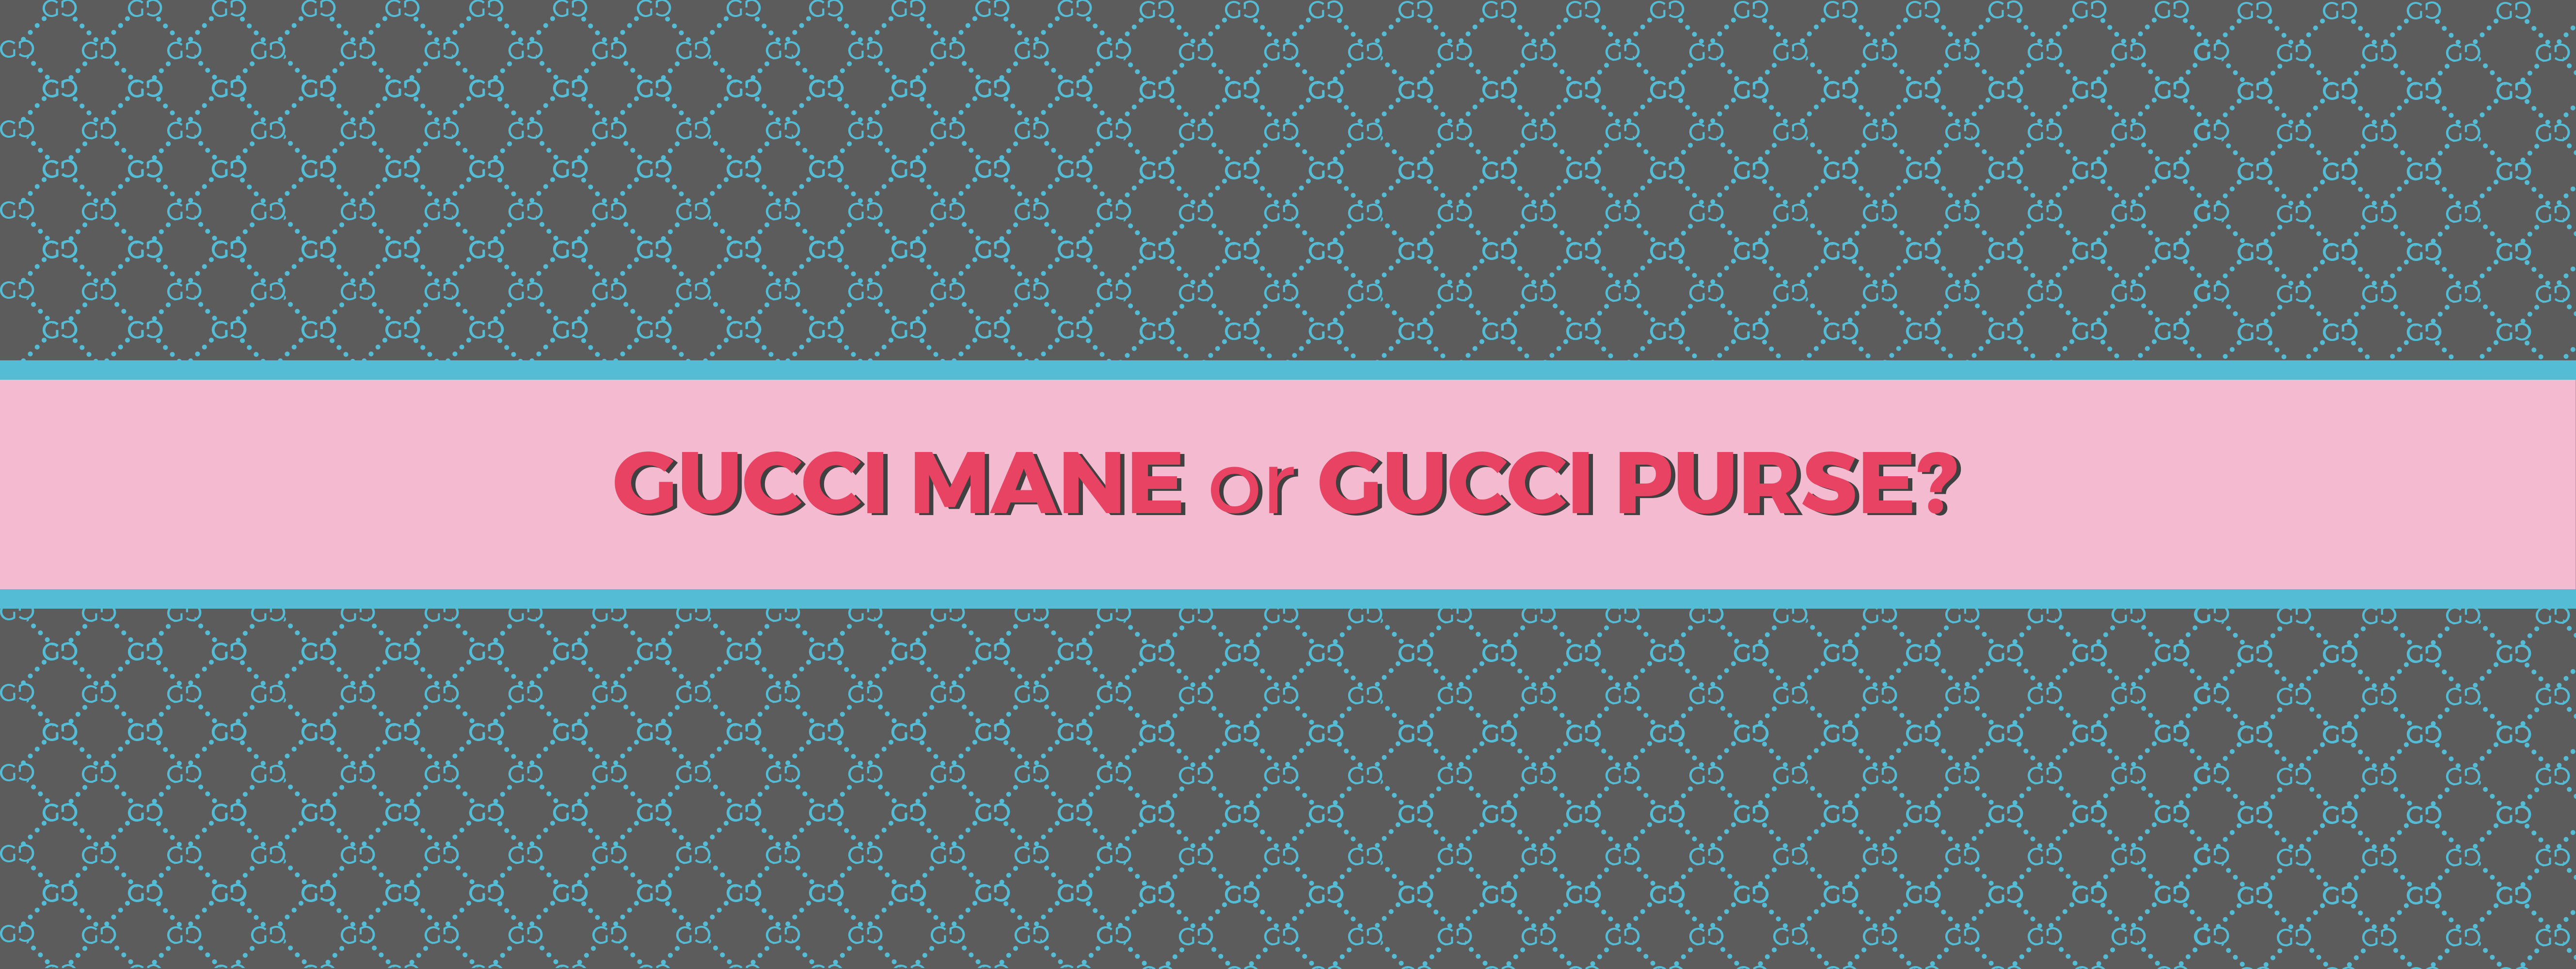 gucci mane or gucci purse banner